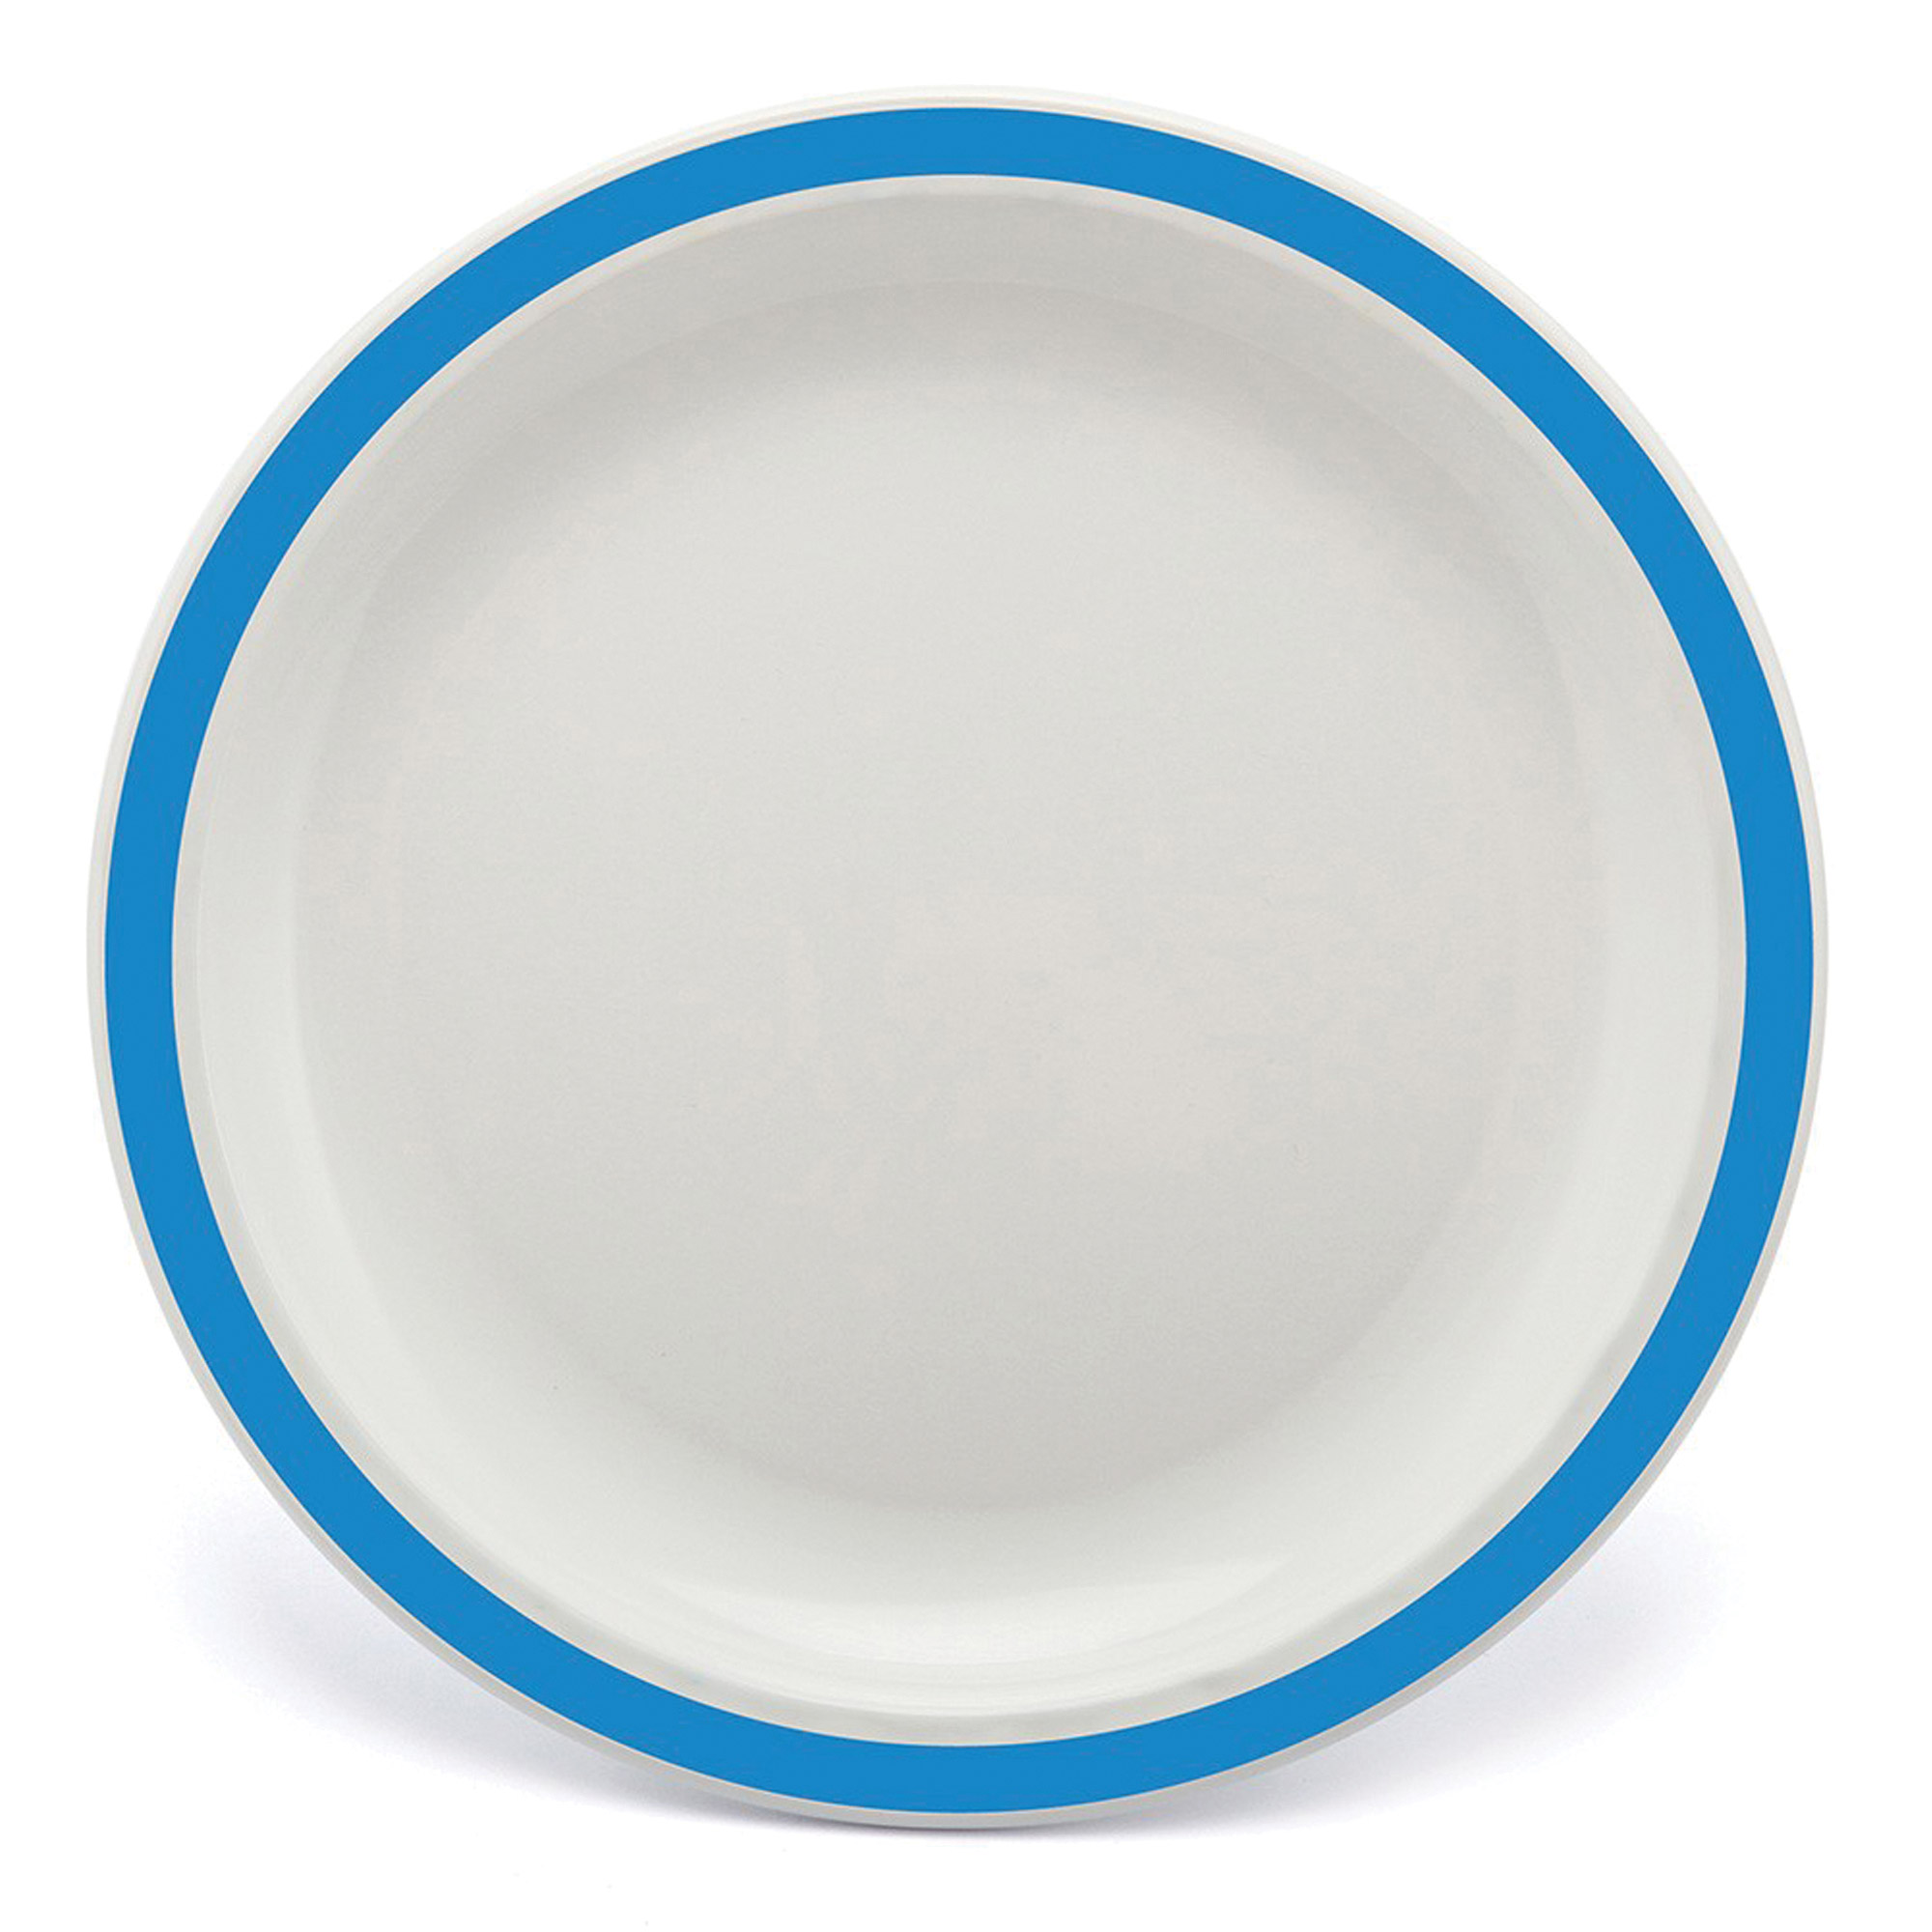 Polycarb White Side Plate 17cm with Med BlueNarrow Rim - EACH